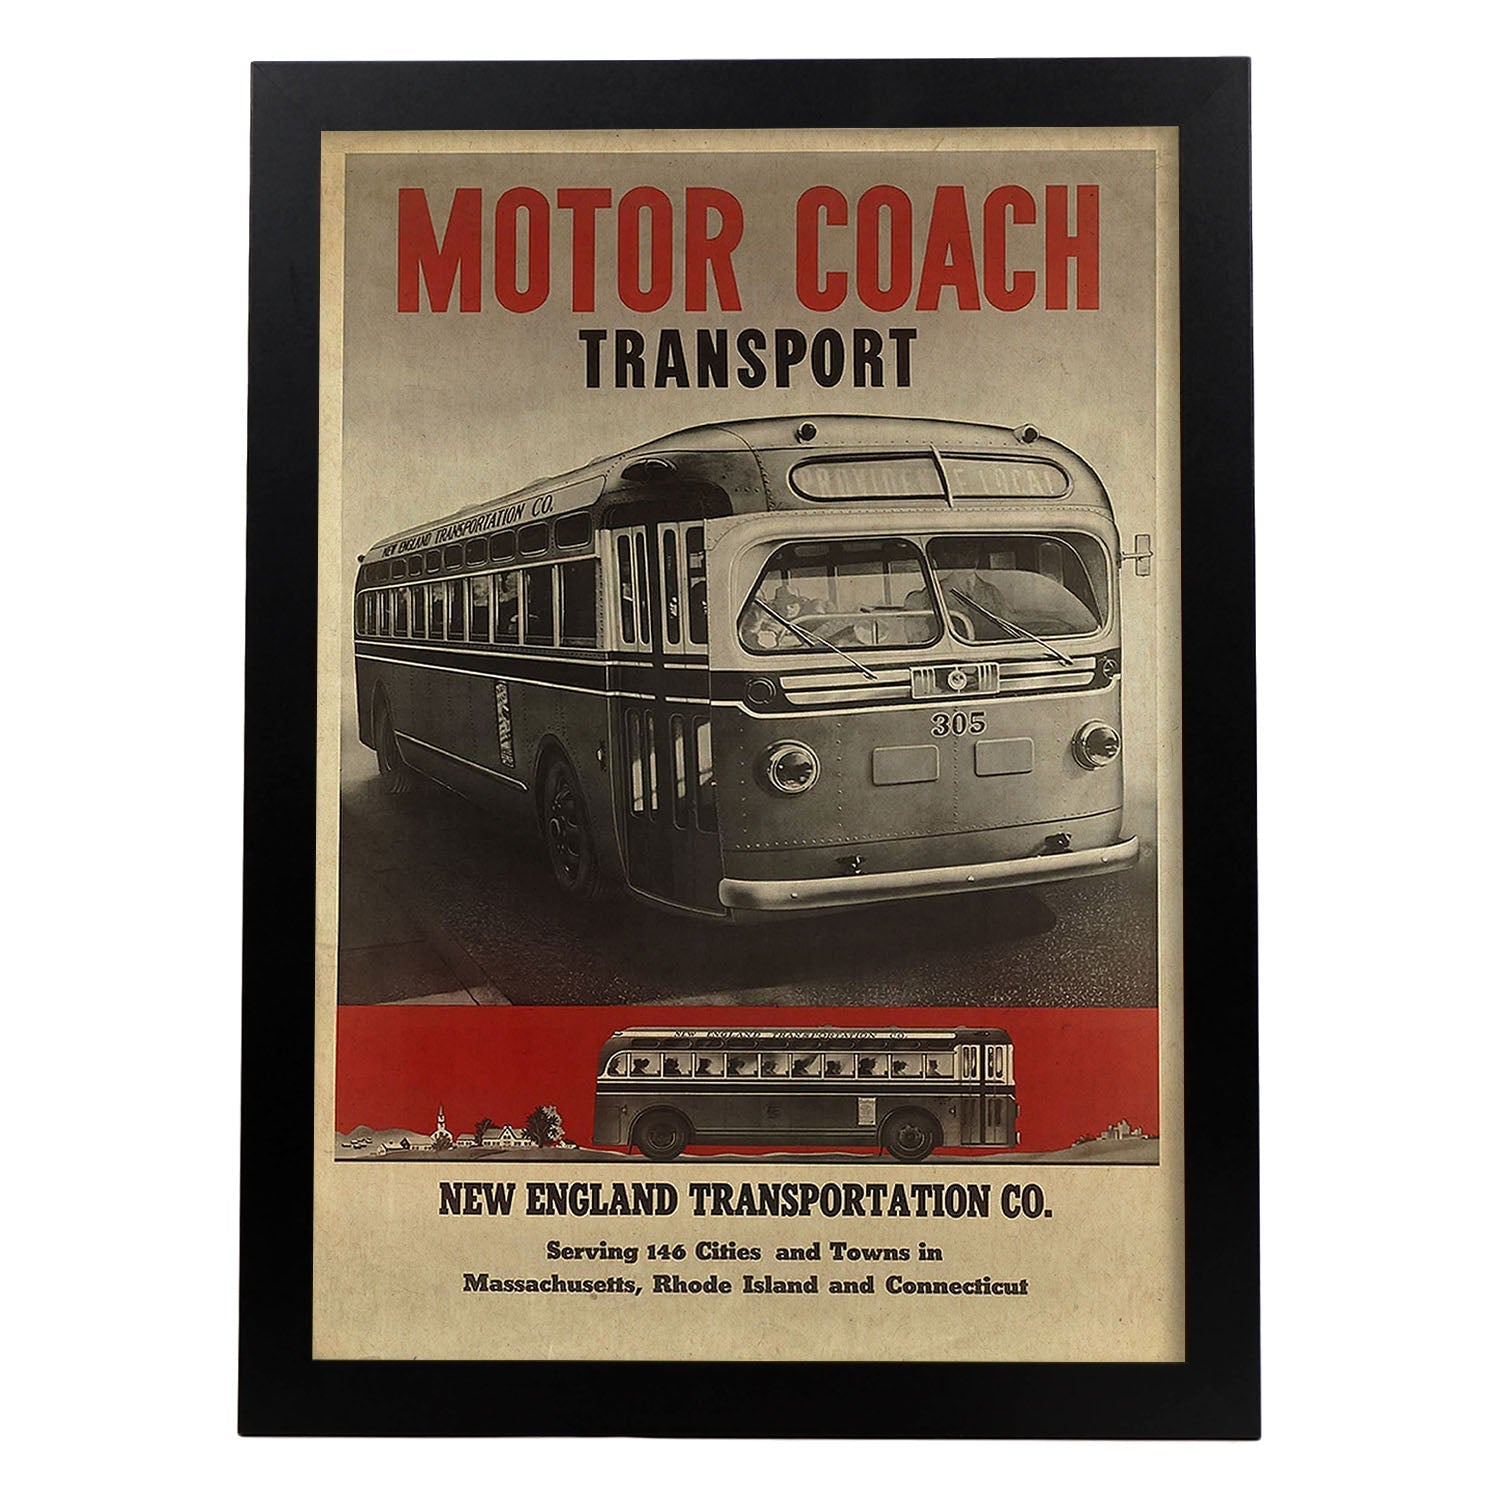 Poster vintage. Cartel vintage Motor Coach Transport de 1940.-Artwork-Nacnic-A4-Marco Negro-Nacnic Estudio SL